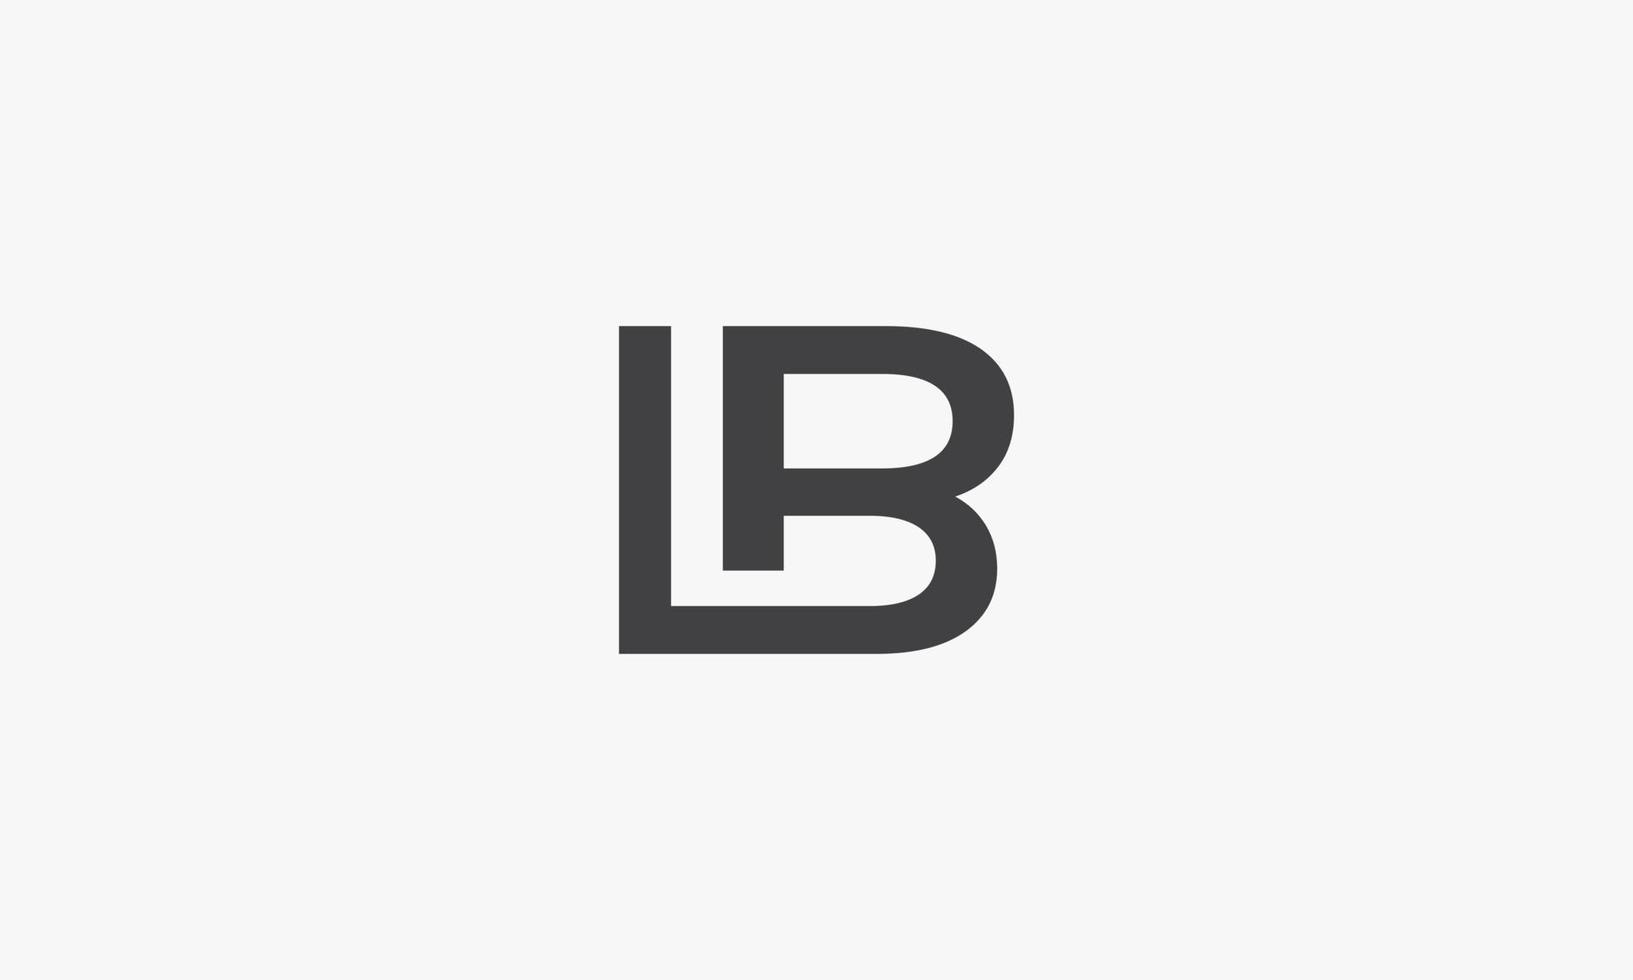 LB letter logo isolated on white background. vector